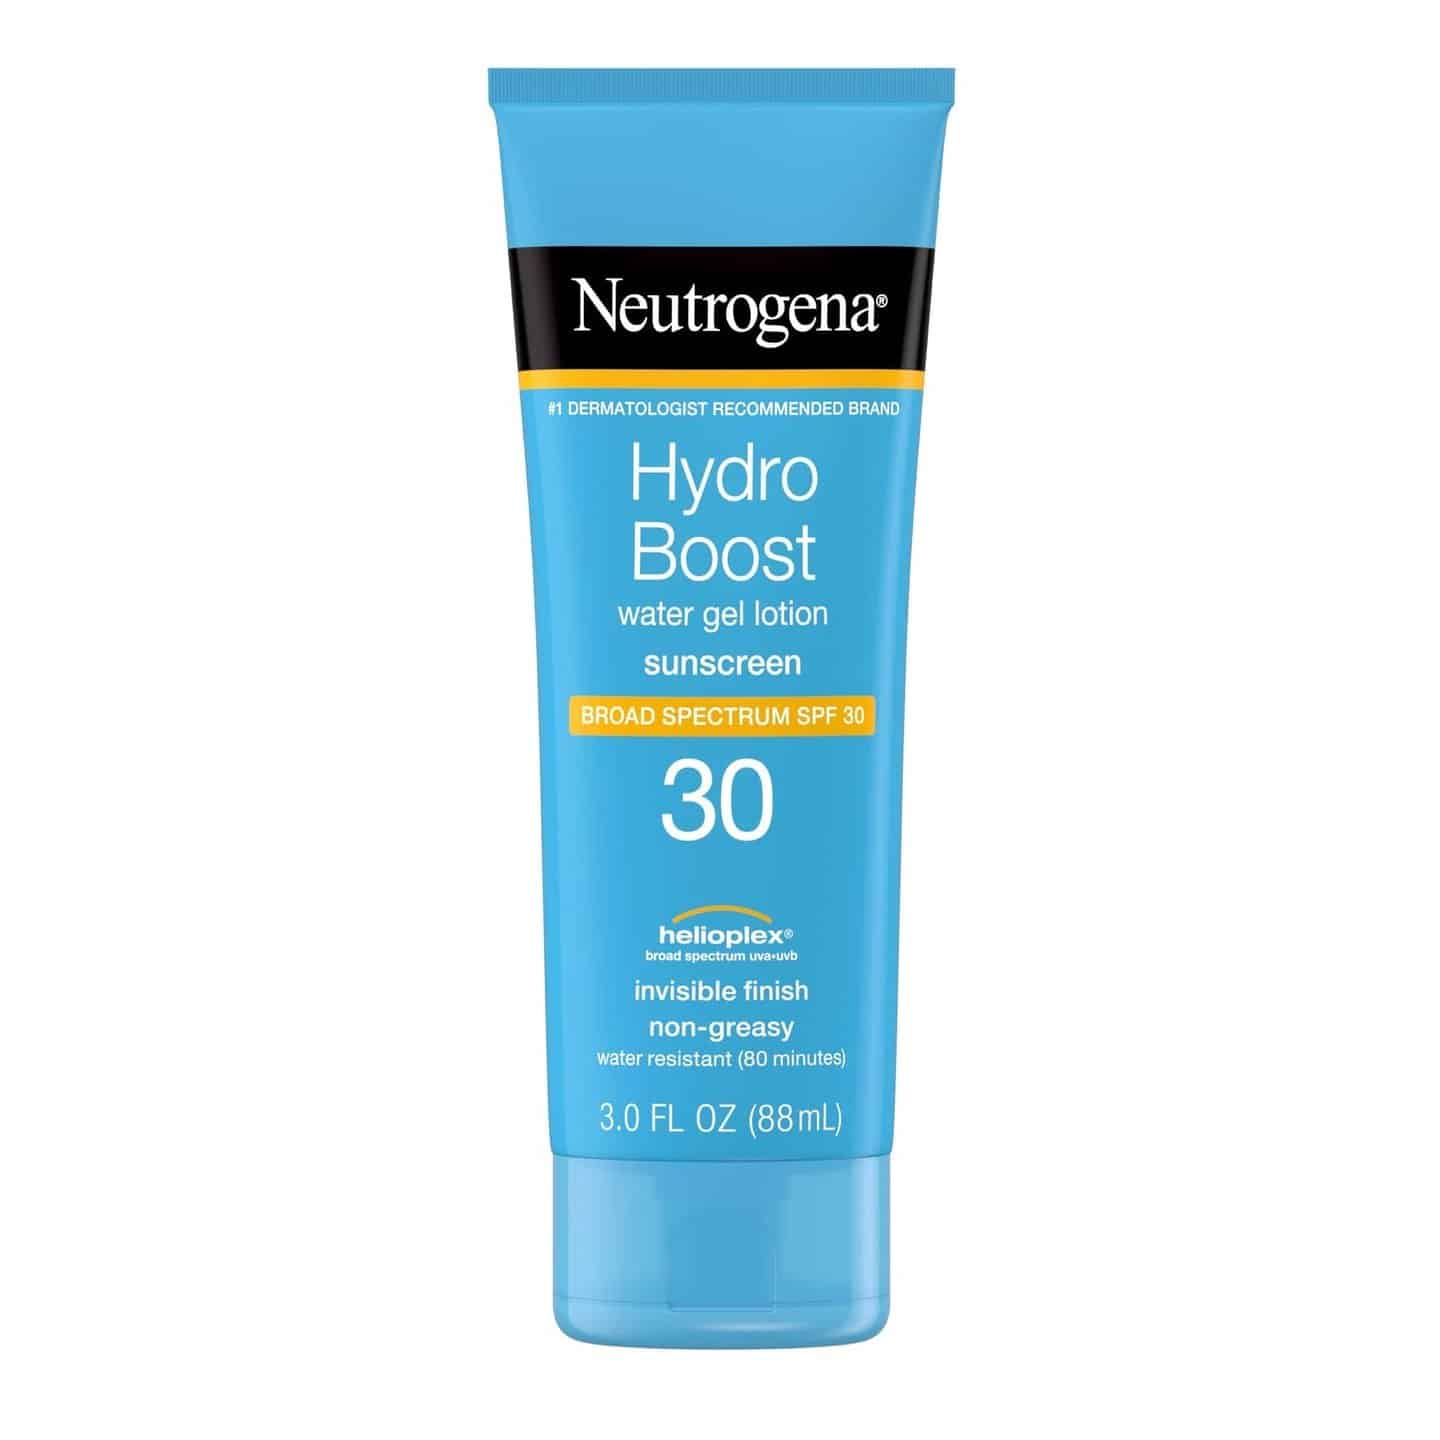 neutrogena hydro boost sunscreen price in pakistan